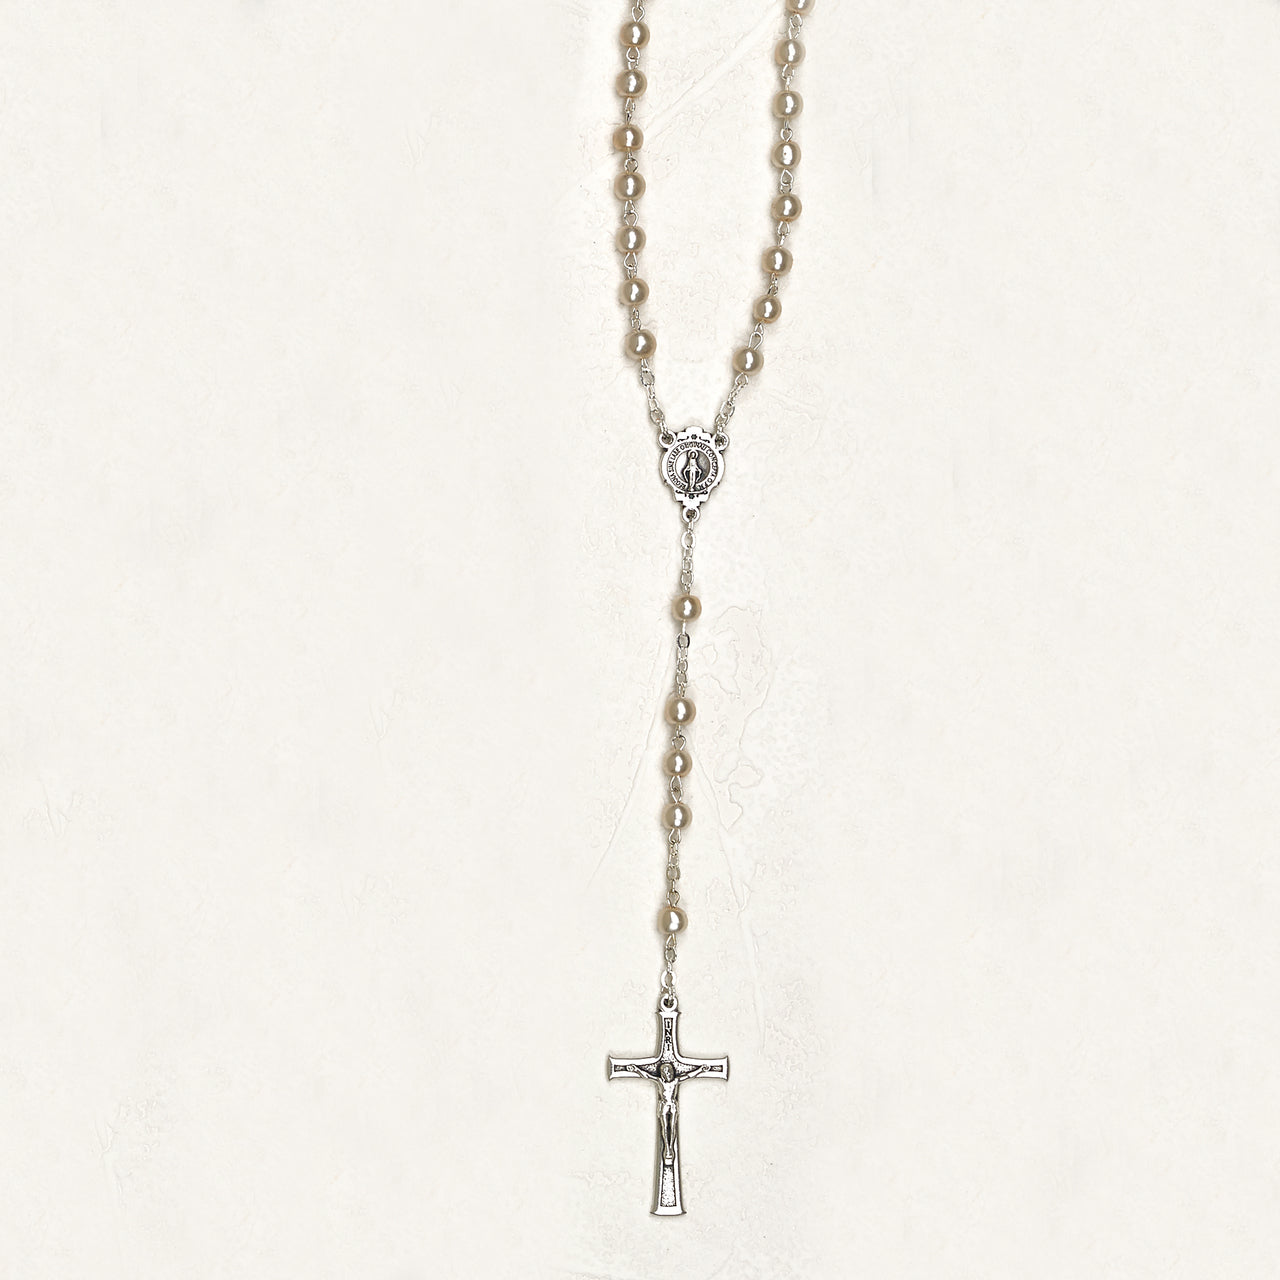 5mm Champagne Imitation Pearl Bead Rosary